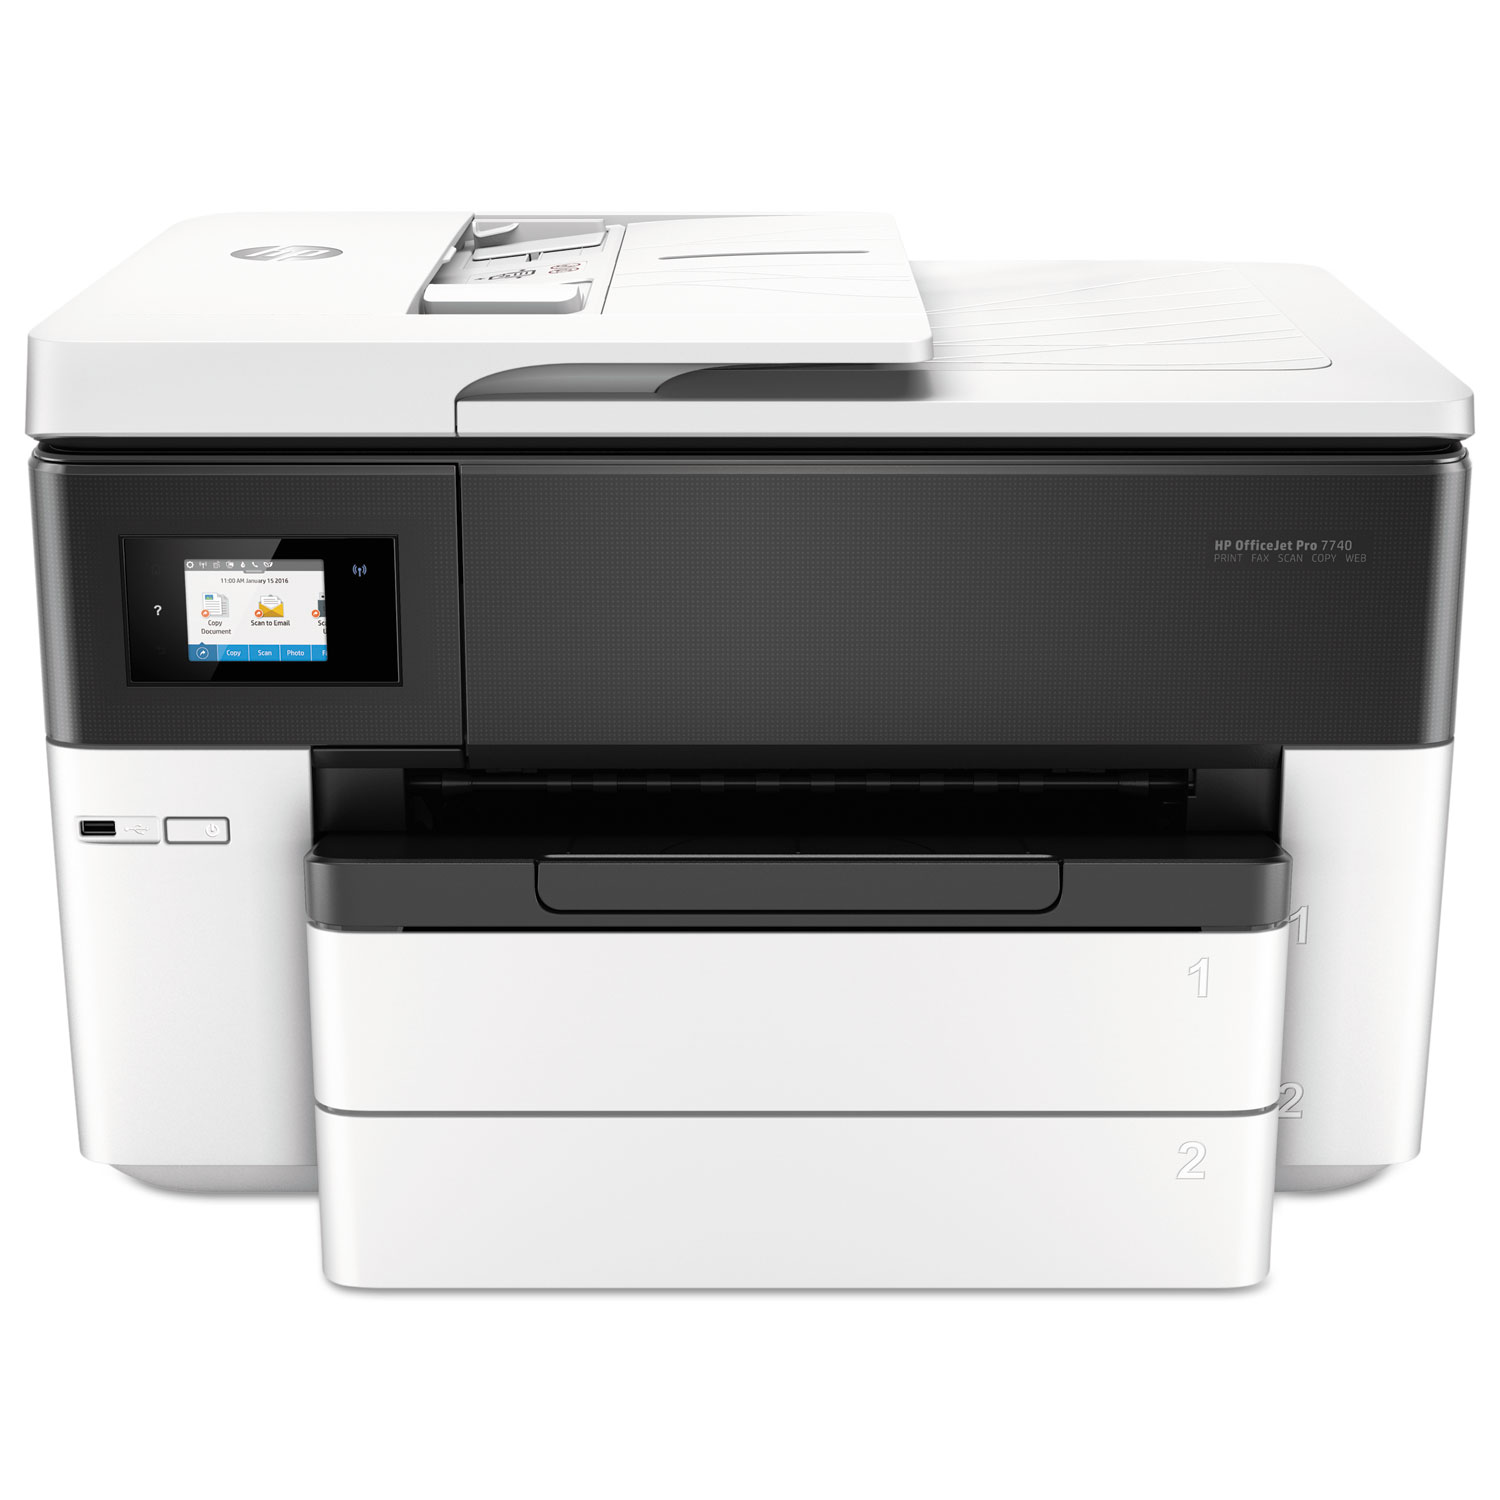  HP G5J38A#B1H OfficeJet Pro 7740 All-in-One Printer, Copy/Fax/Print/Scan (HEWG5J38A) 